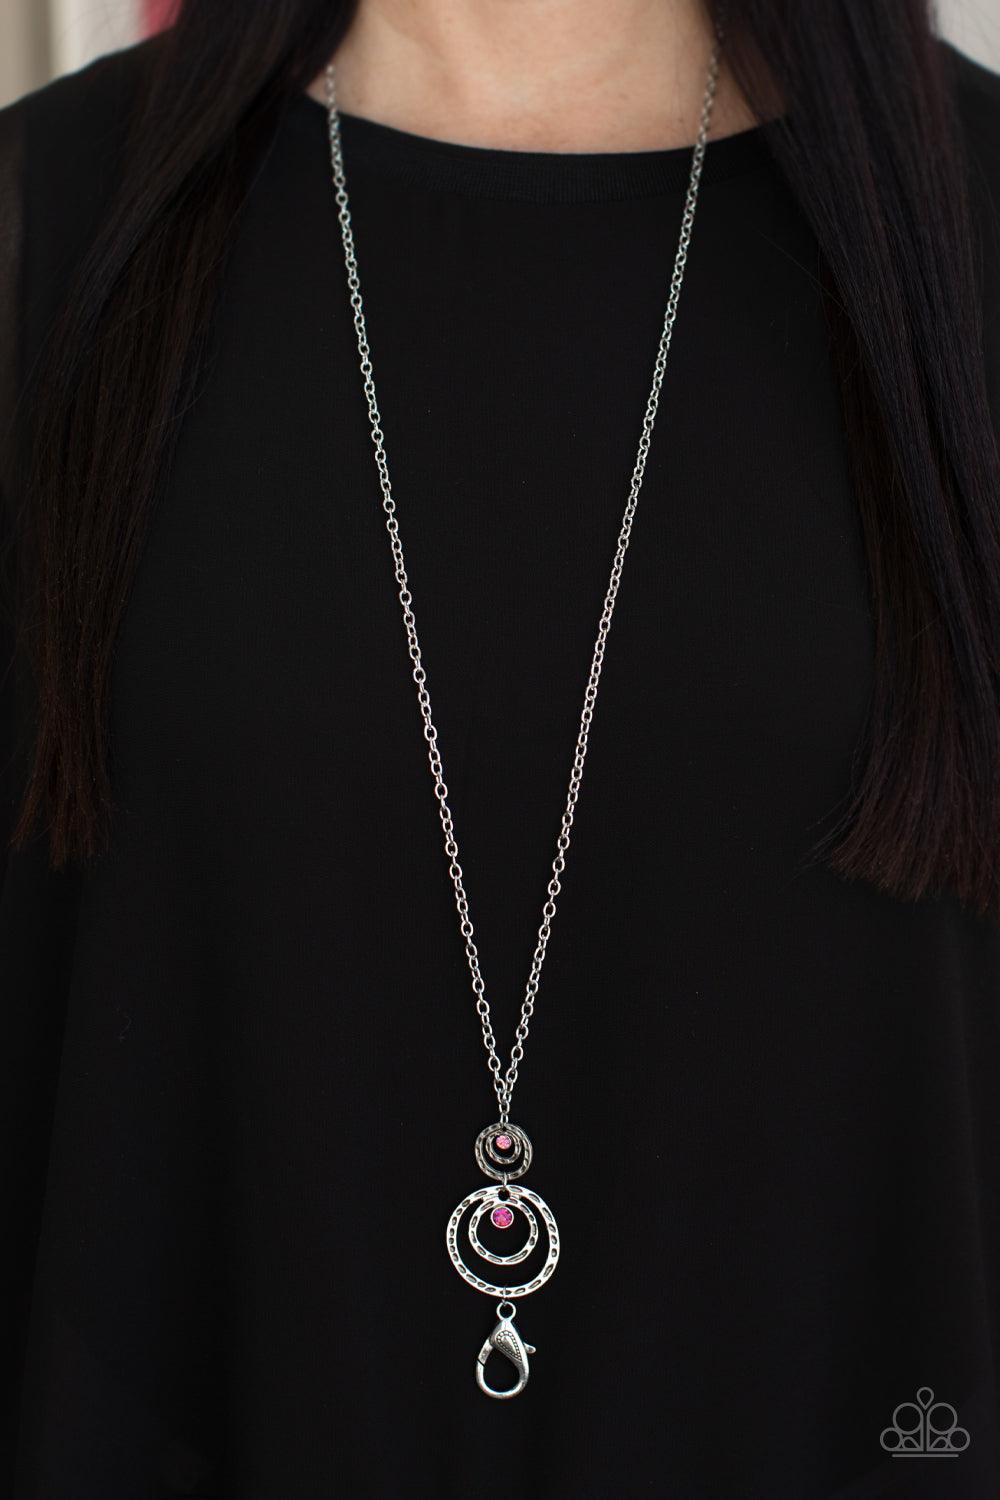 COUTURE Freak Pink Necklace - Jewelry by Bretta - Jewelry by Bretta